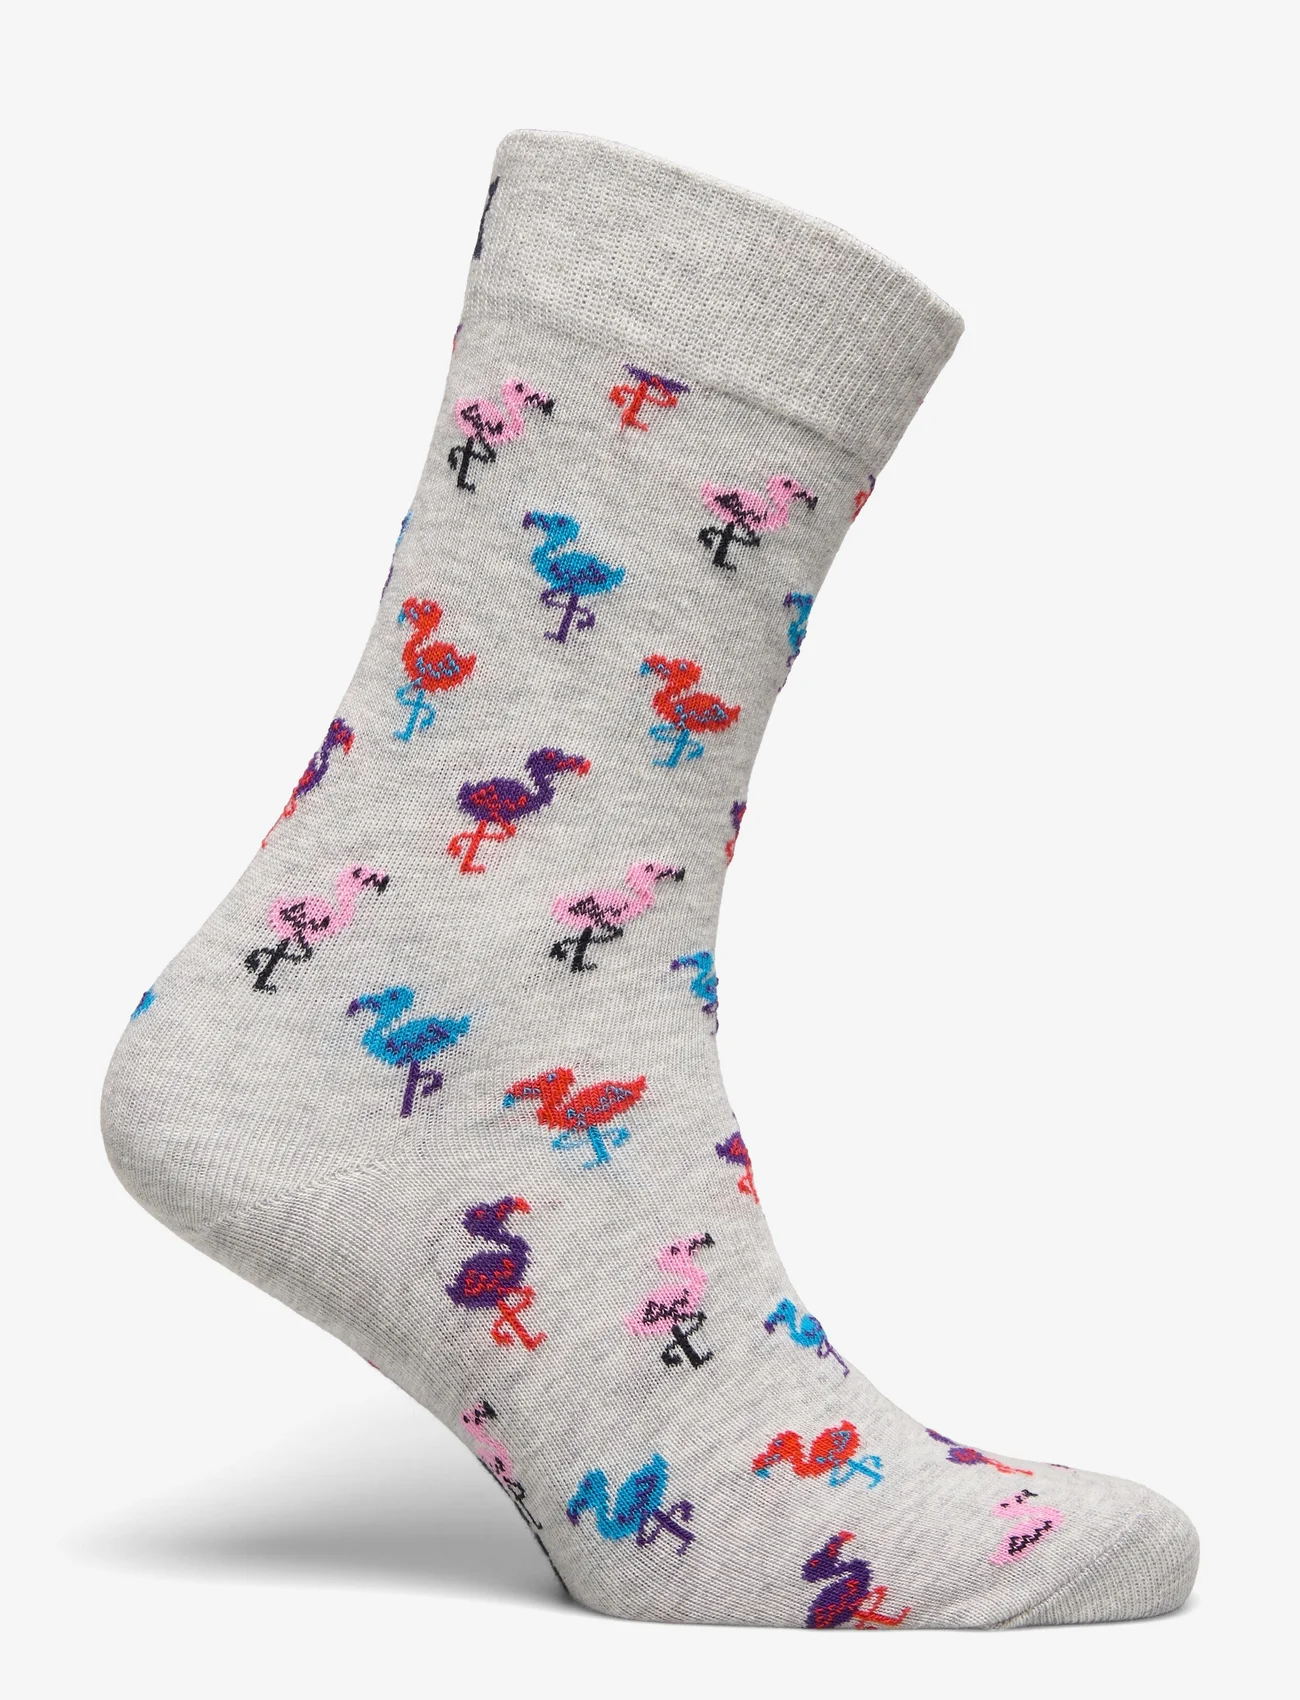 Happy Socks - Flamingo Sock - lowest prices - grey - 1